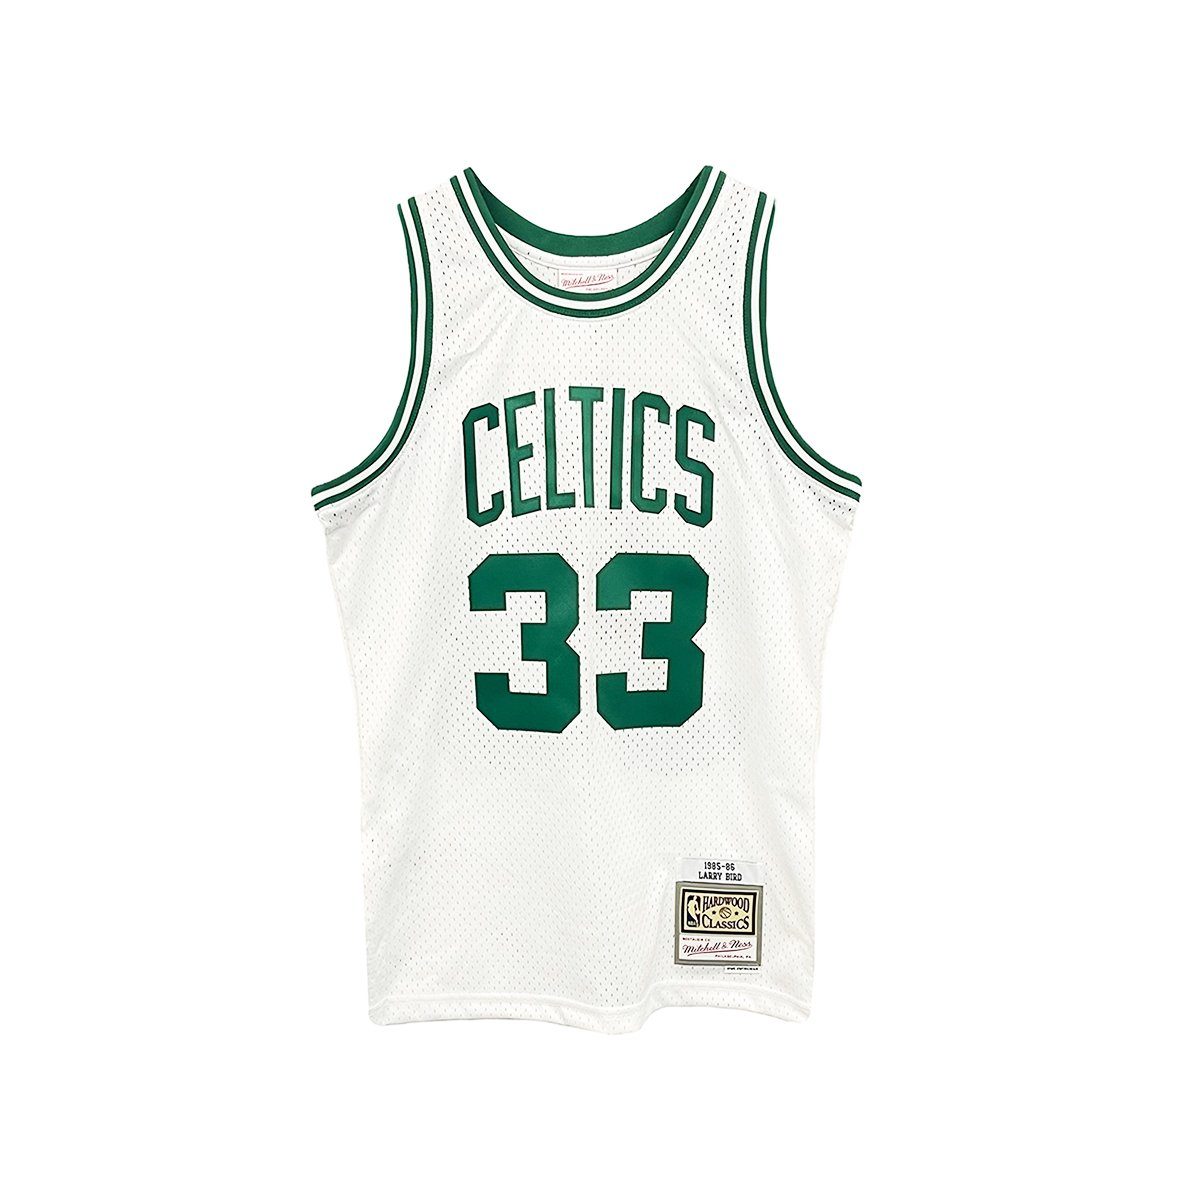 Mitchell & Ness Basketballtrikot Boston Celtics 1985-86 Larry Bird